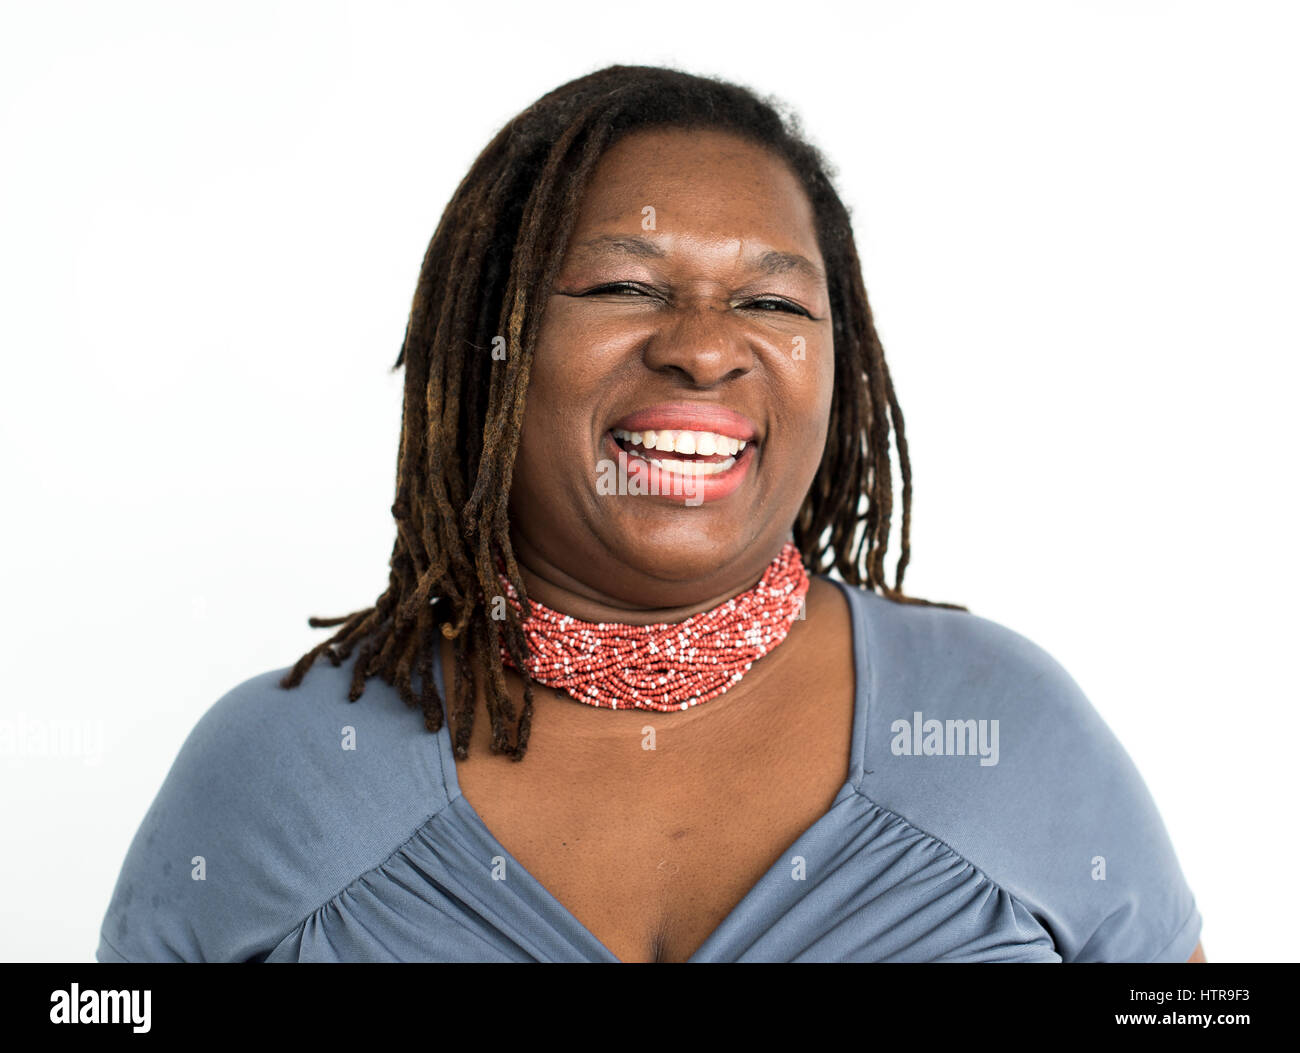 Black woman laughing cheerful studio portrait Stock Photo - Alamy